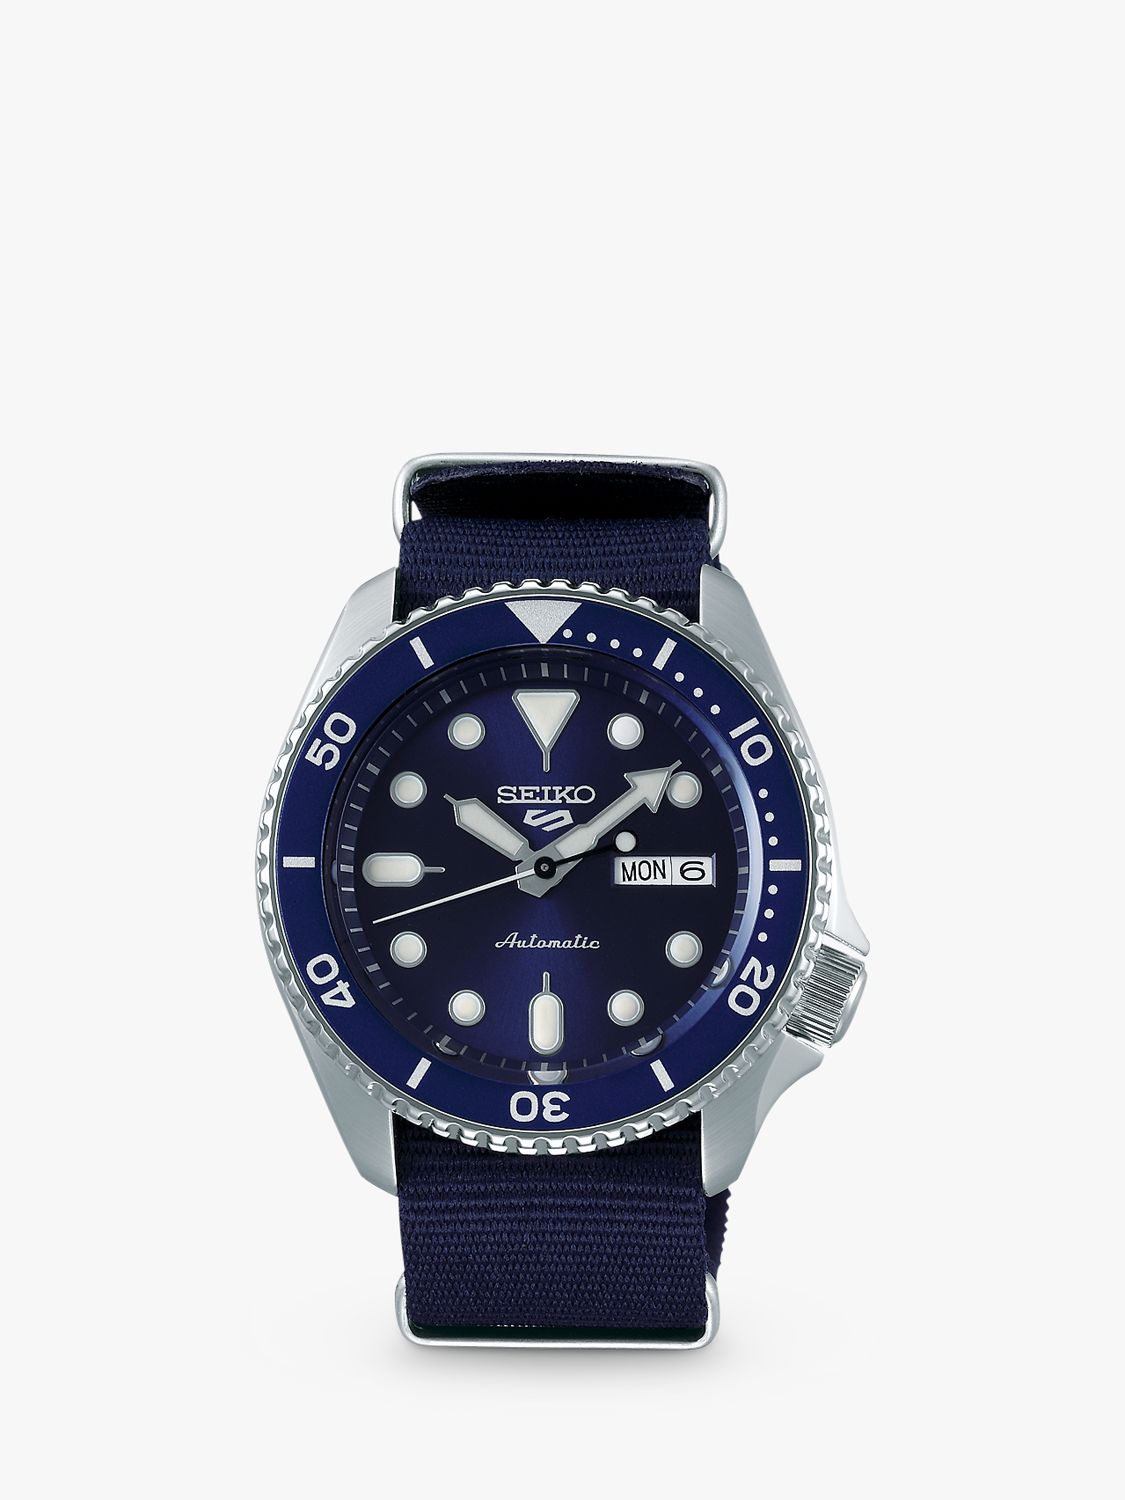 Seiko SRPD51K2 Men's 5 Sports Automatic Day Date Nato Fabric Strap Watch, Blue